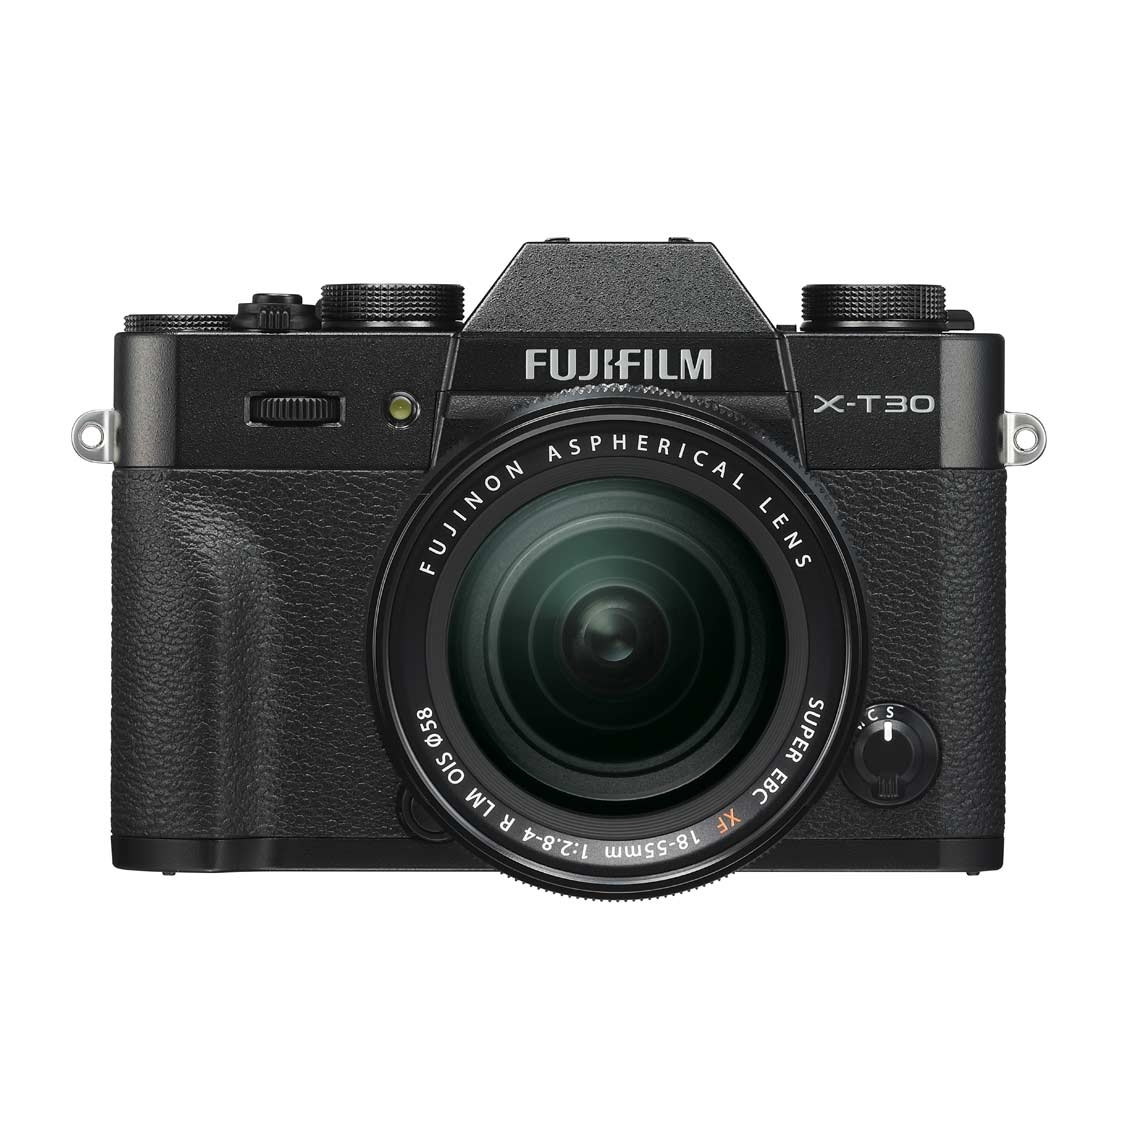 Fujifilm X-T30 Camera (black) with 18-55mm f2.8-4 Lens